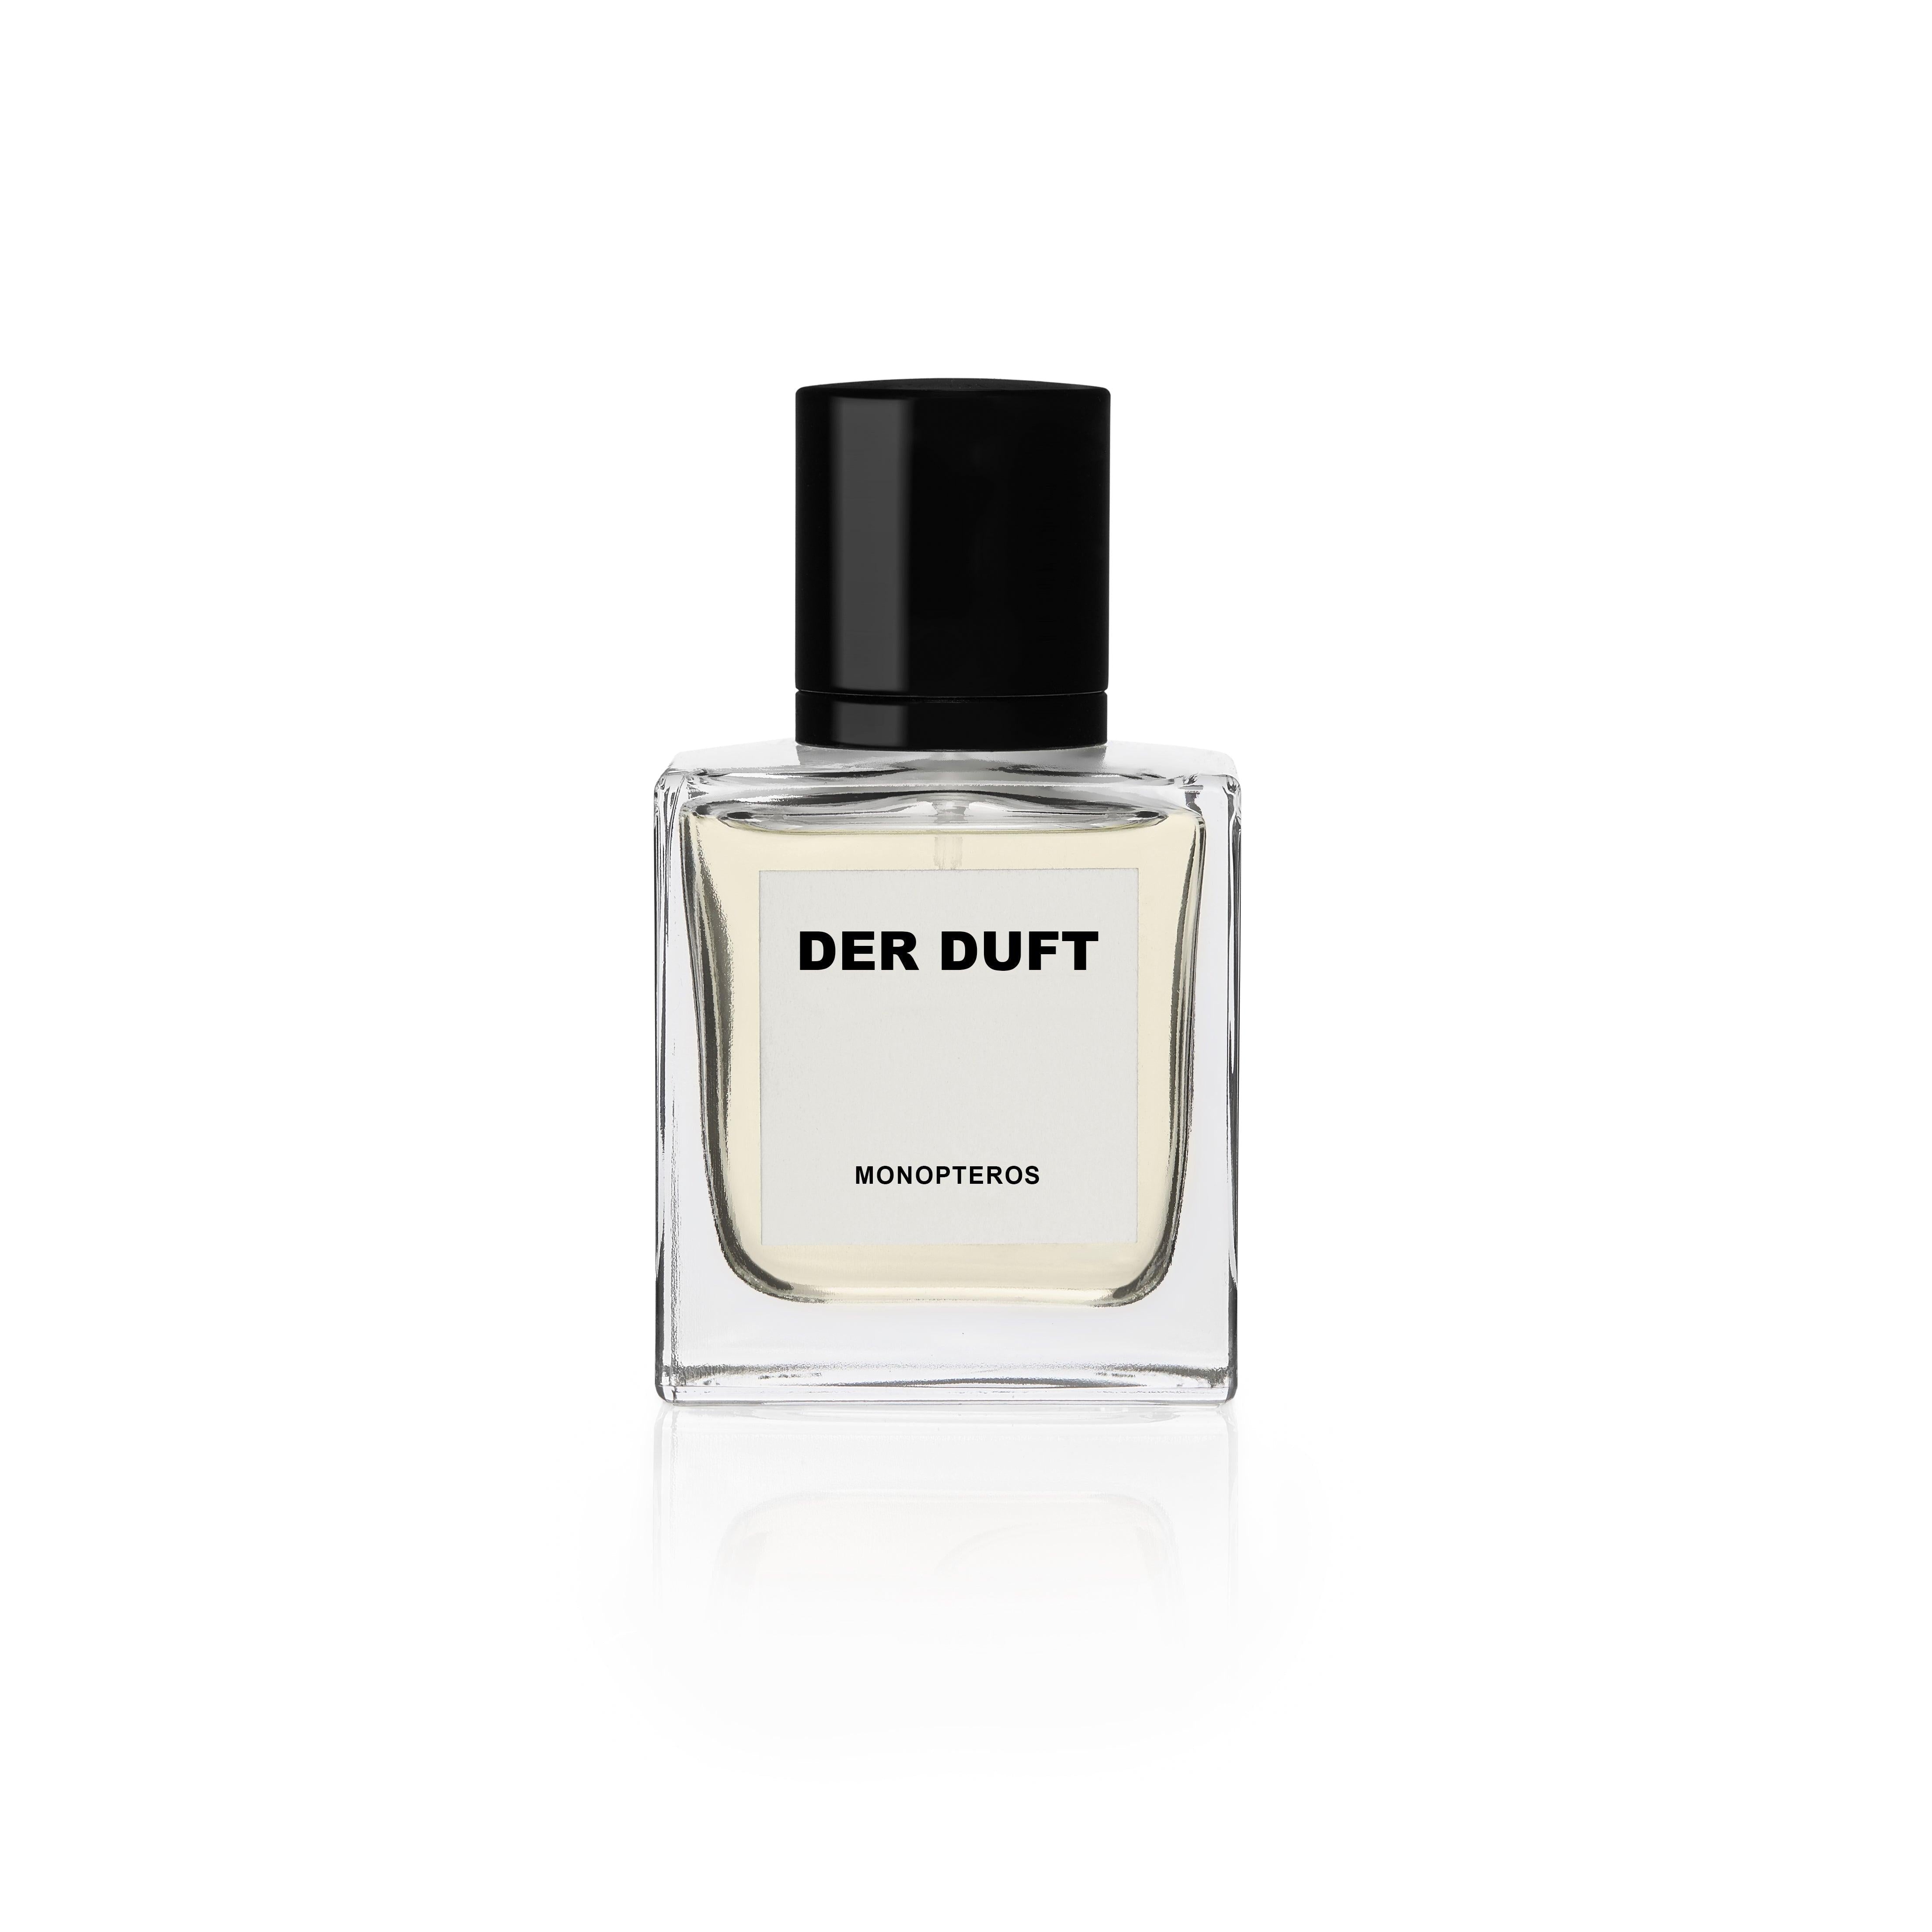 Monopteros by Der Duft at Indigo Perfumery